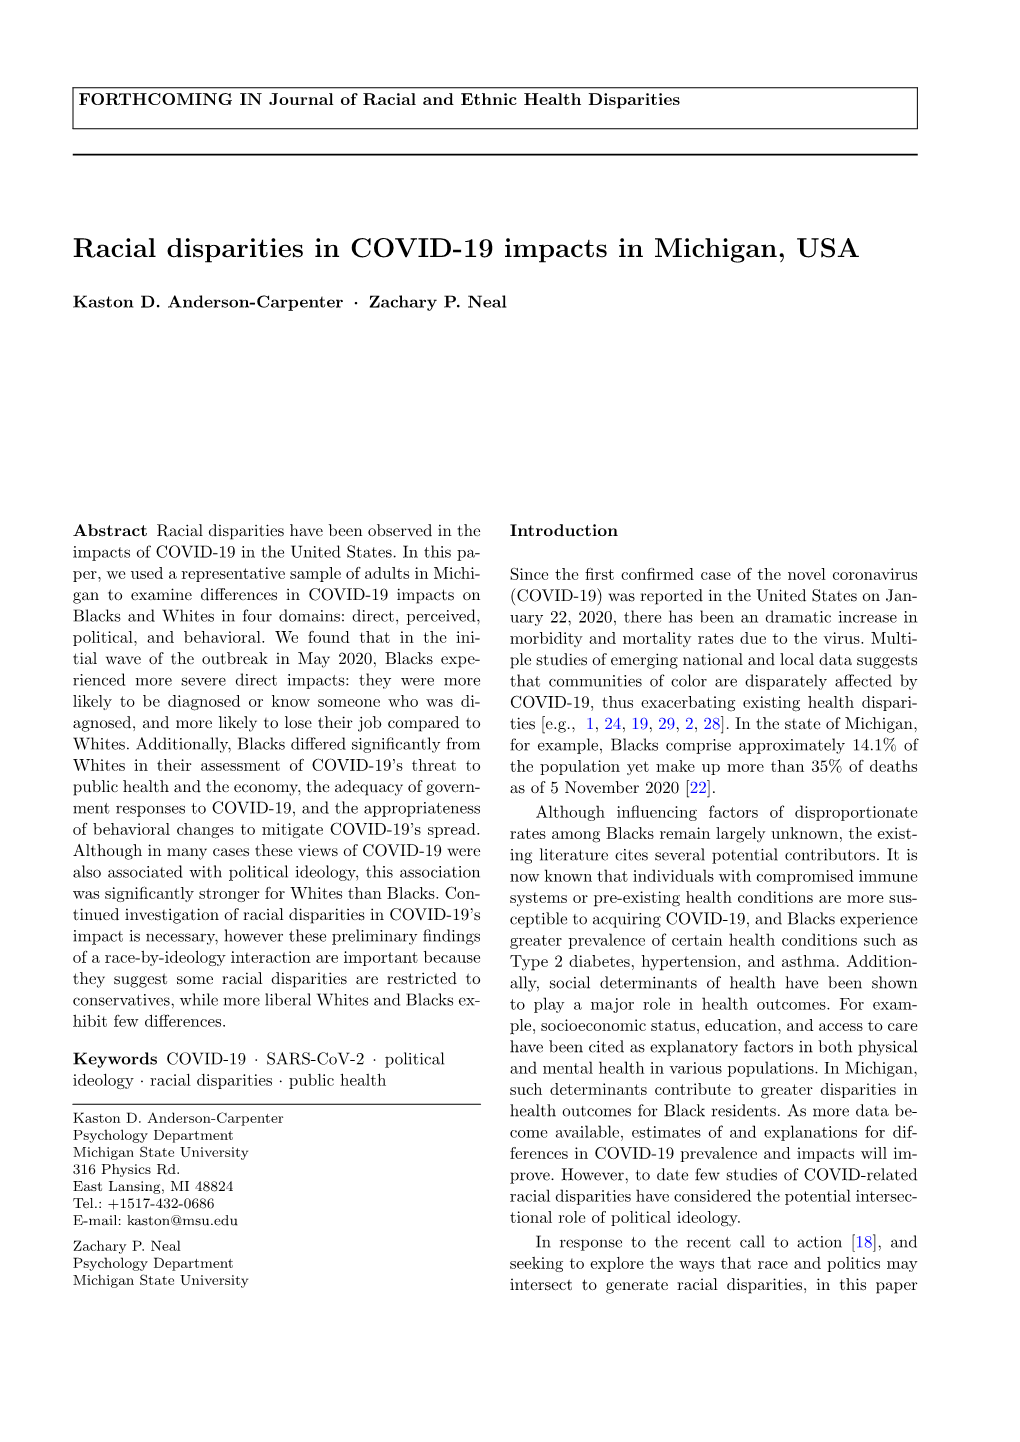 Racial Disparities in COVID-19 Impacts in Michigan, USA